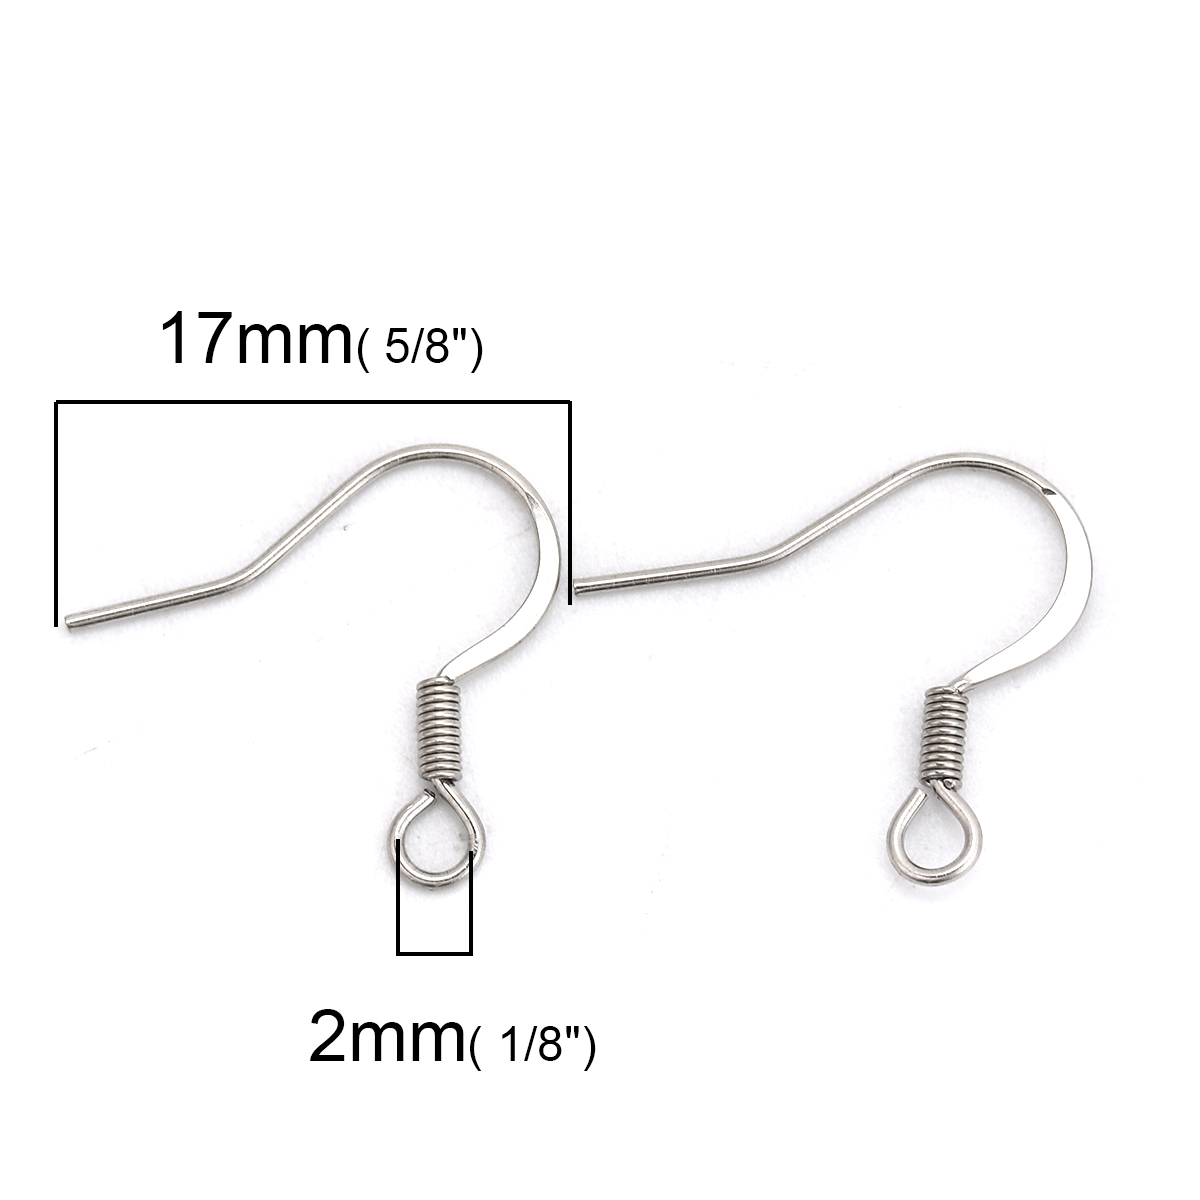 Picture of 316 Stainless Steel Ear Wire Hooks Earring Findings Silver Tone W/ Loop 17mm( 5/8") x 17mm( 5/8"), Post/ Wire Size: (21 gauge), 20 PCs